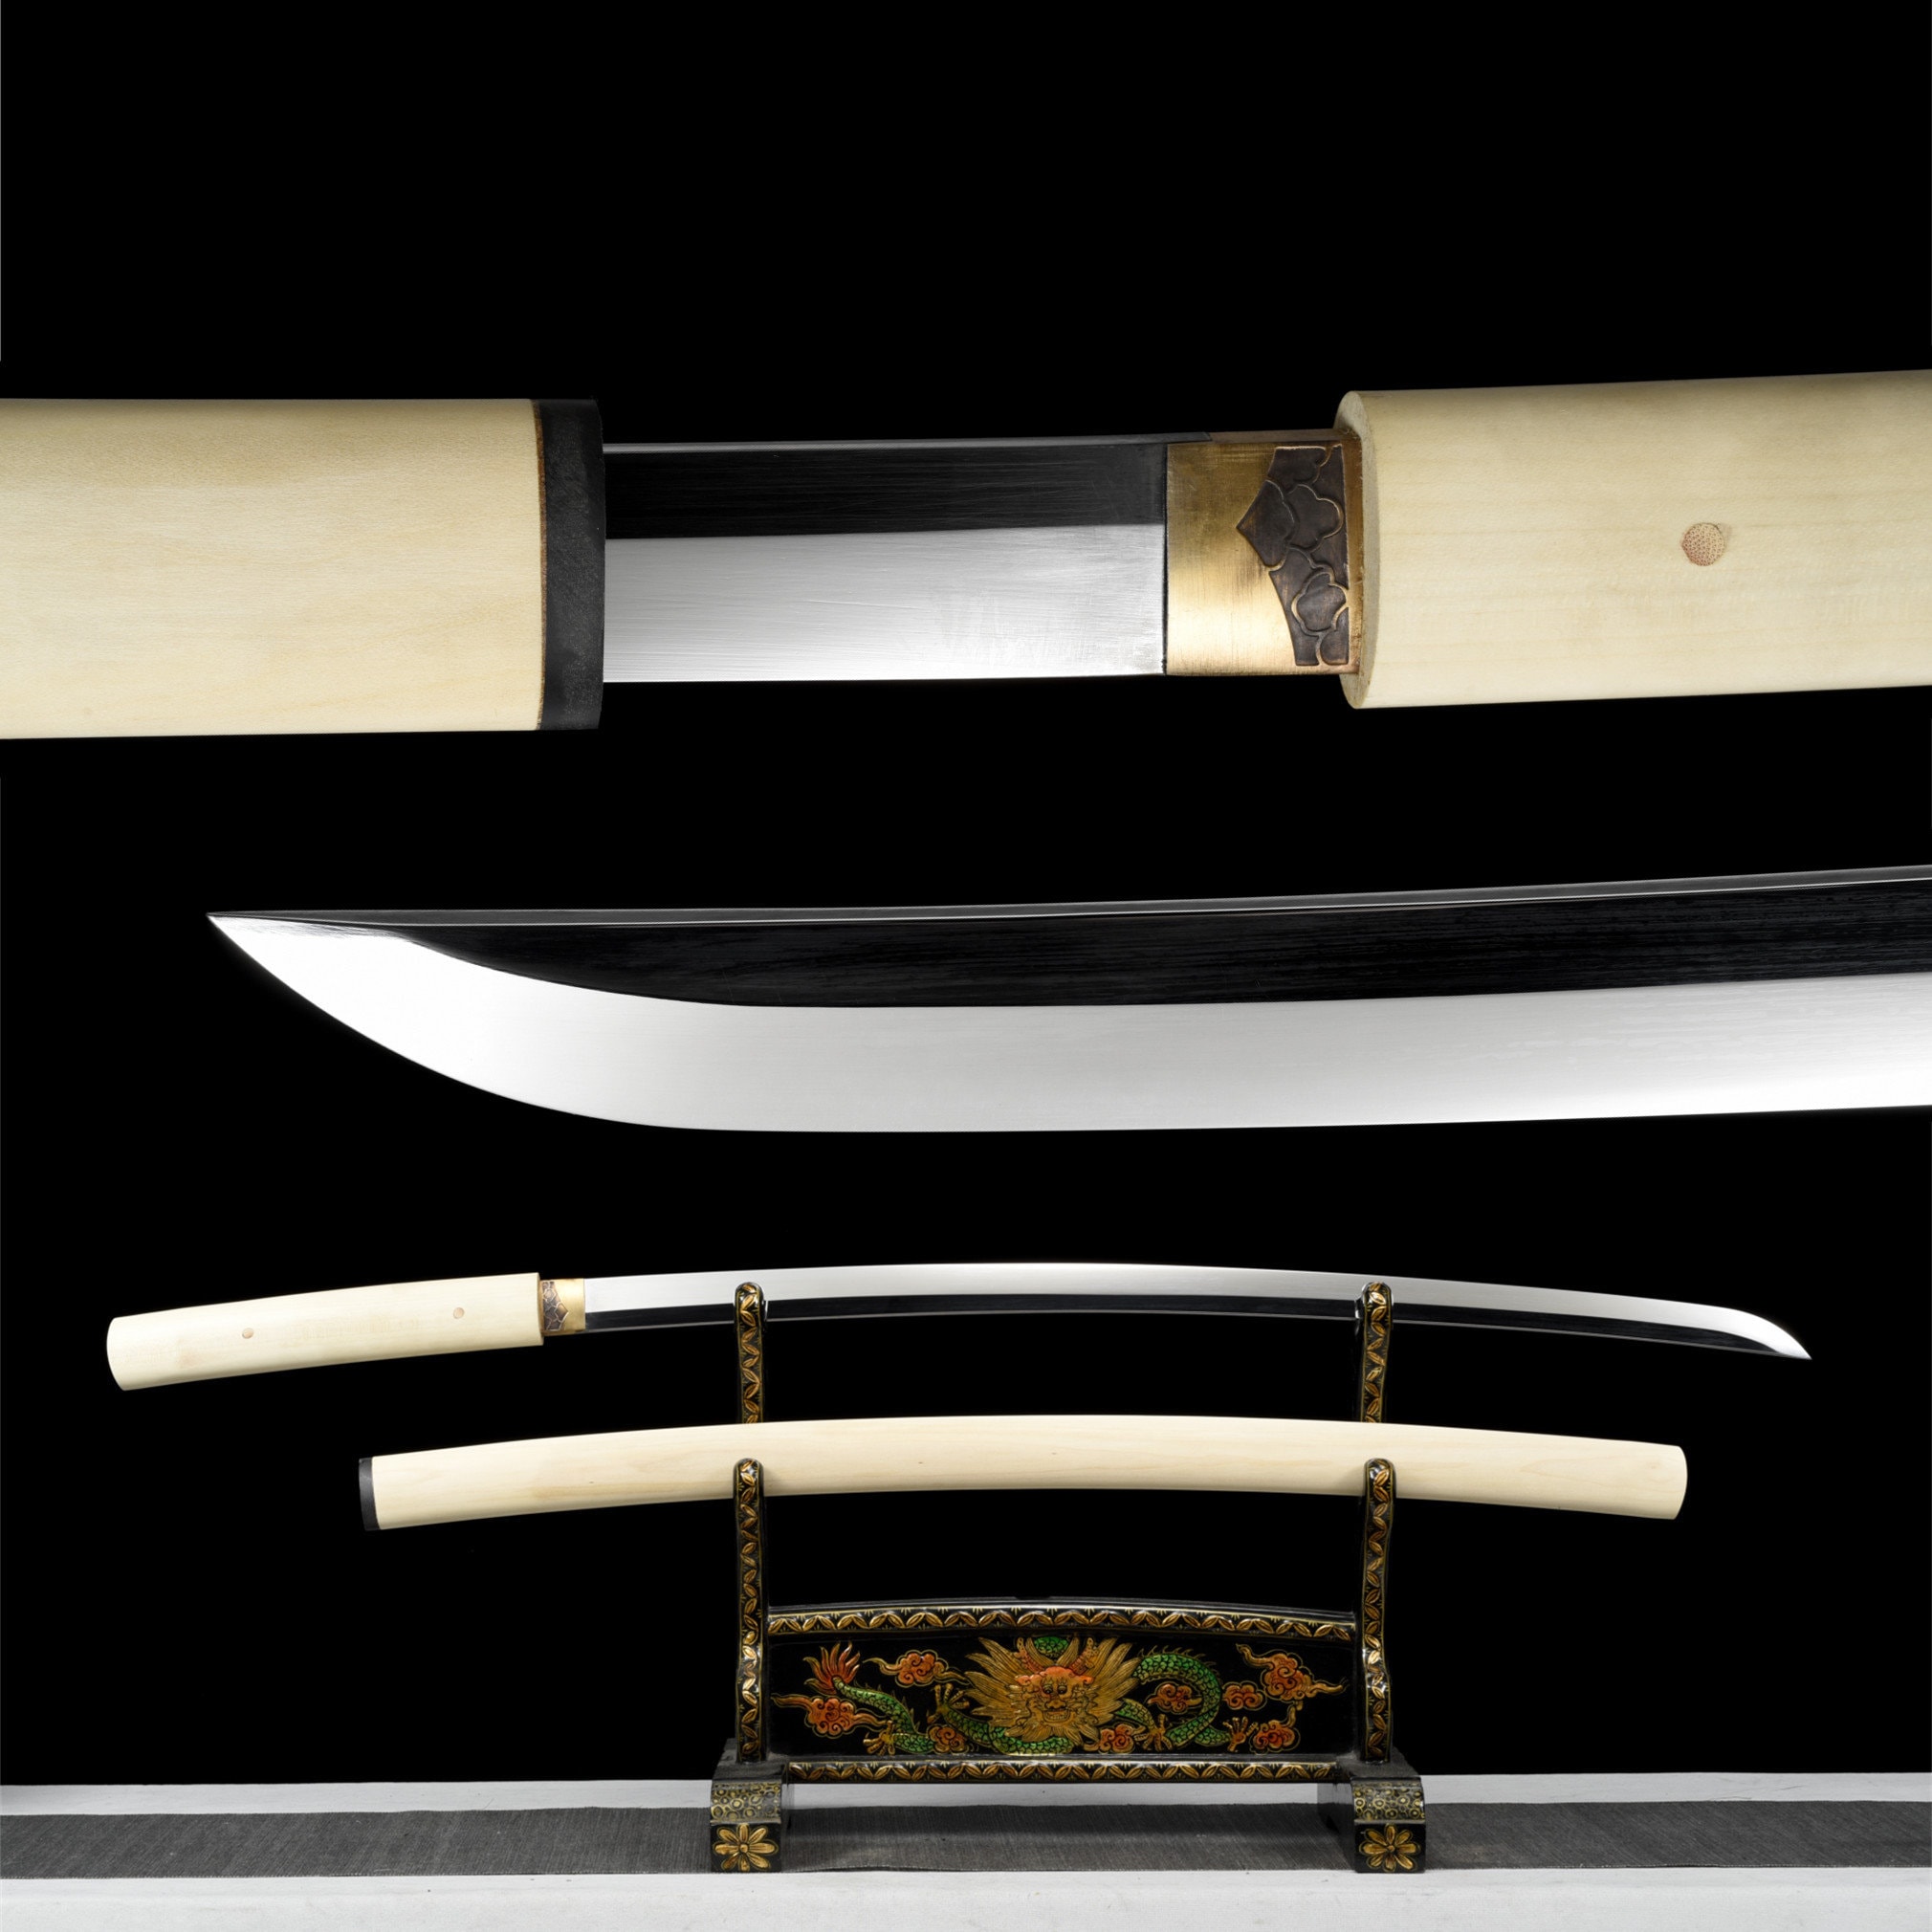 Single sword wall display fibreboard stand black rack for japanese